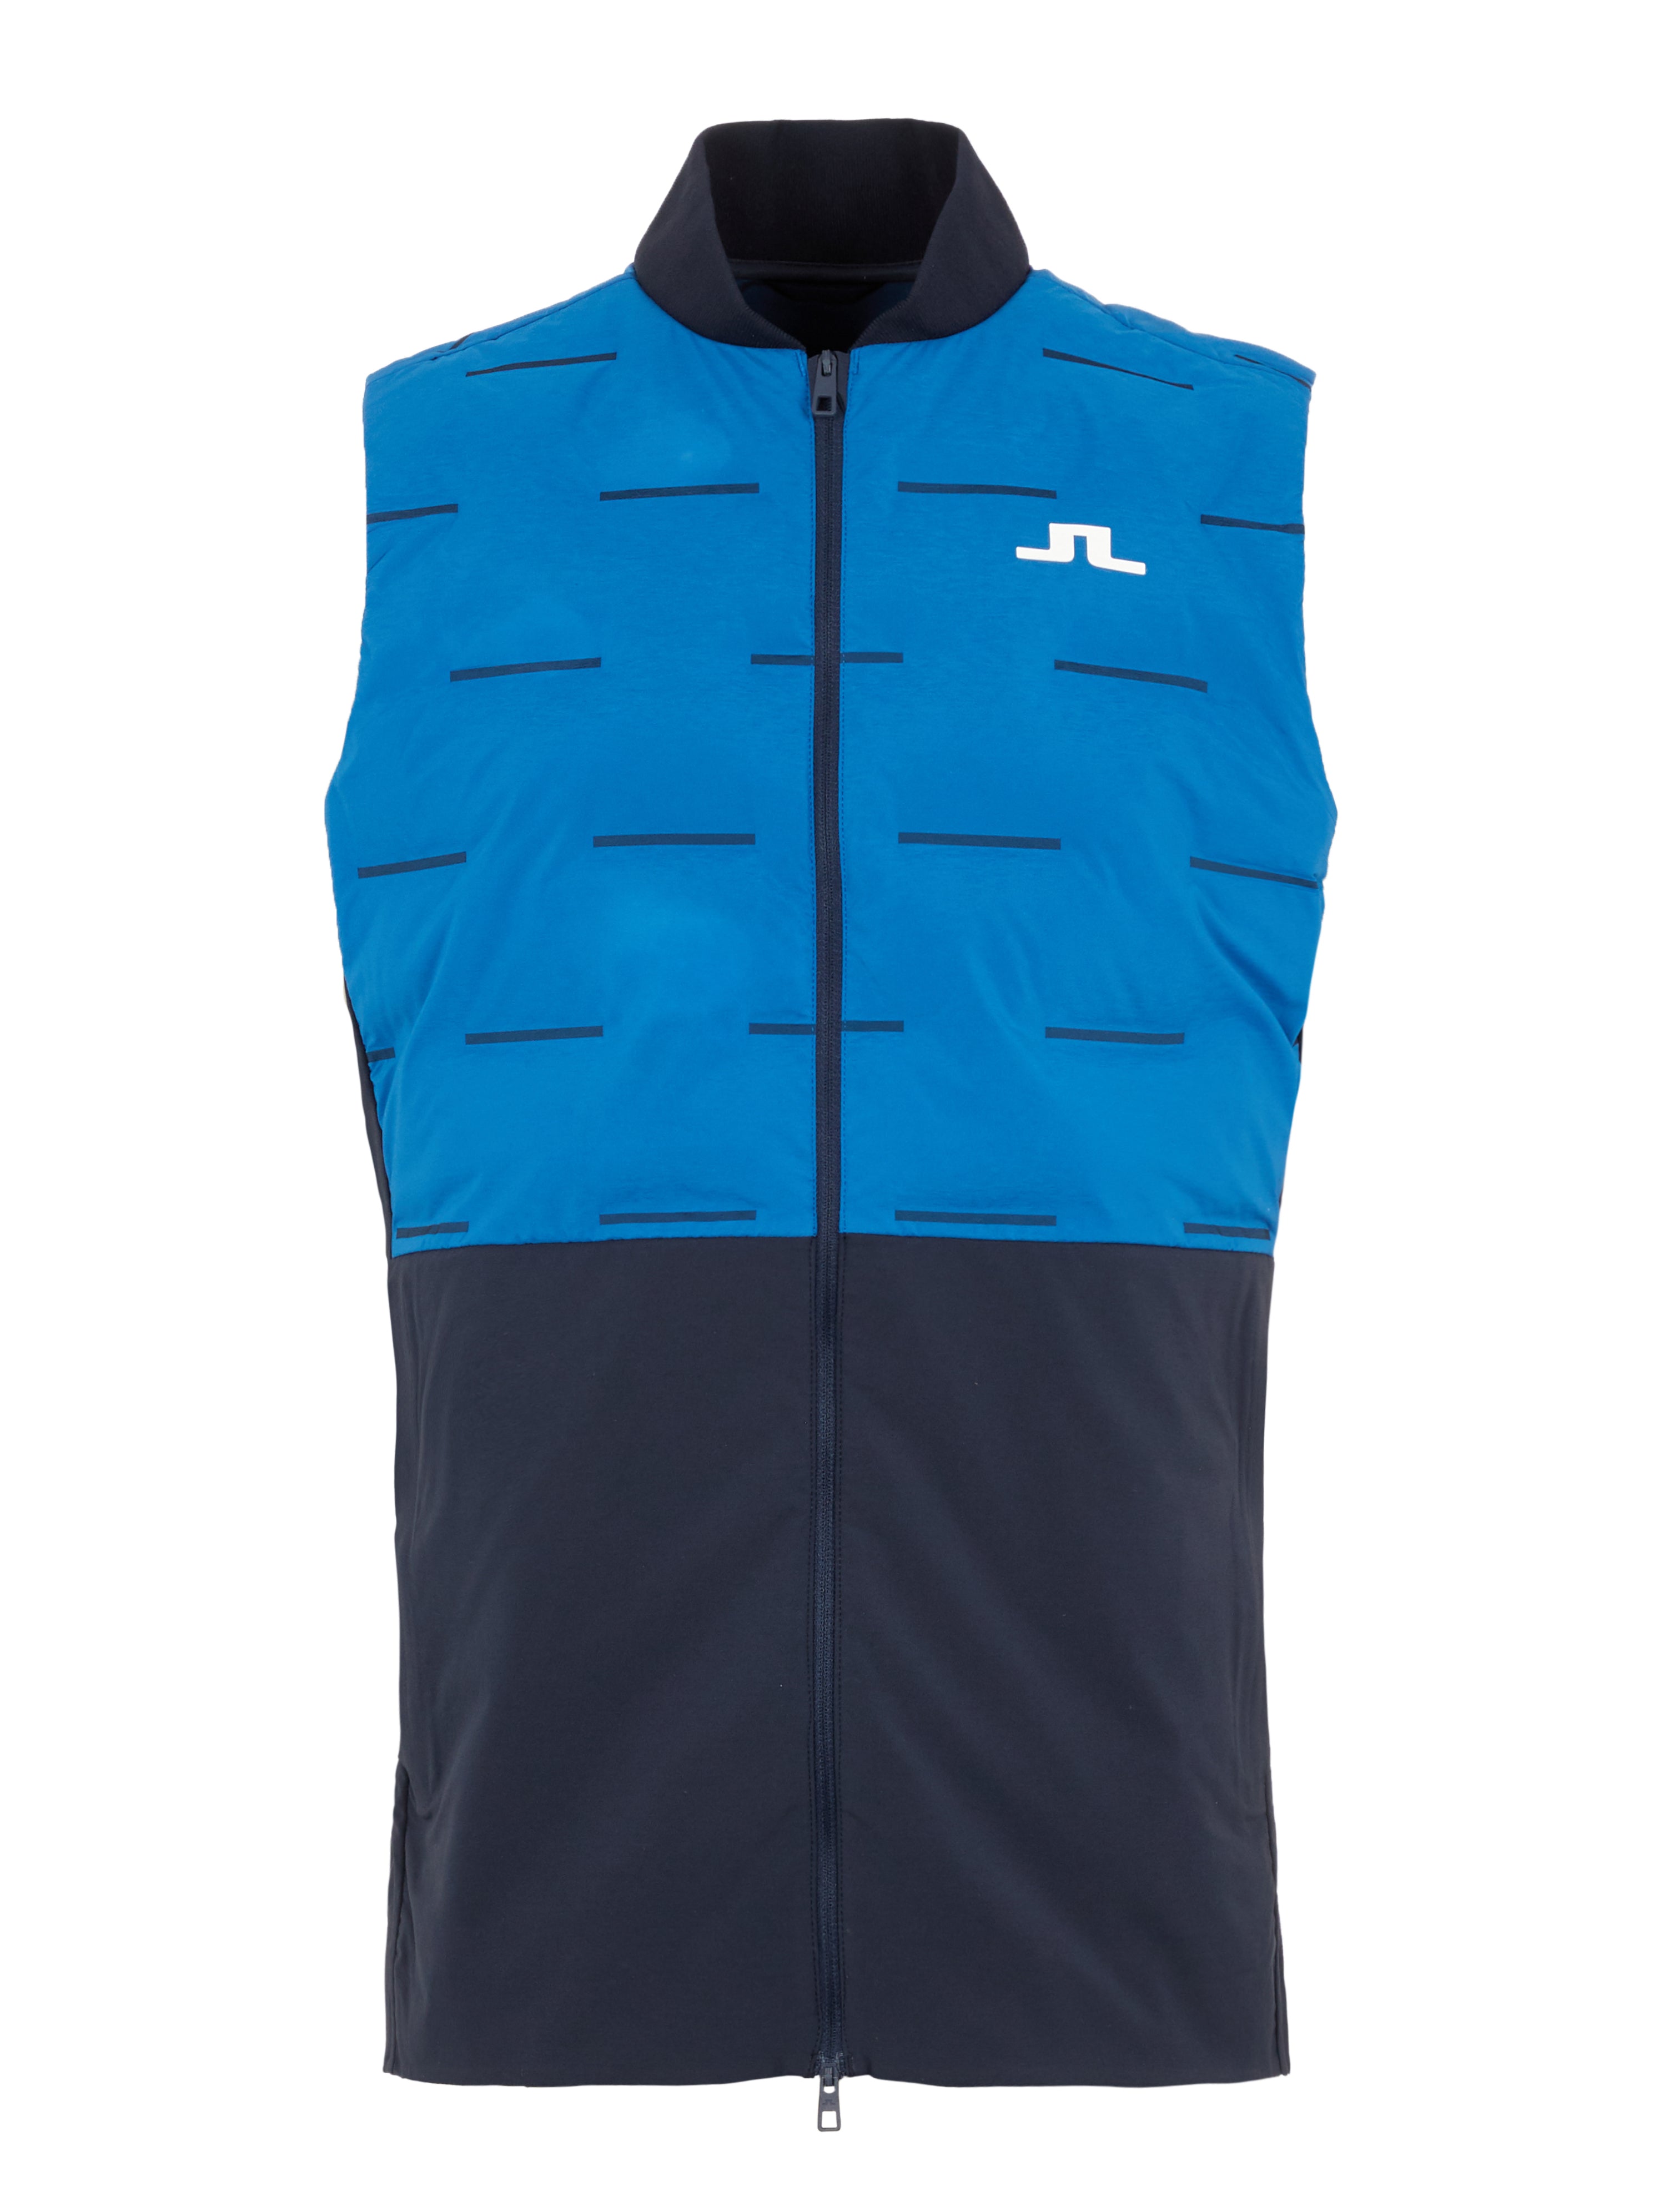 'Shield' Golf Windproof Vest